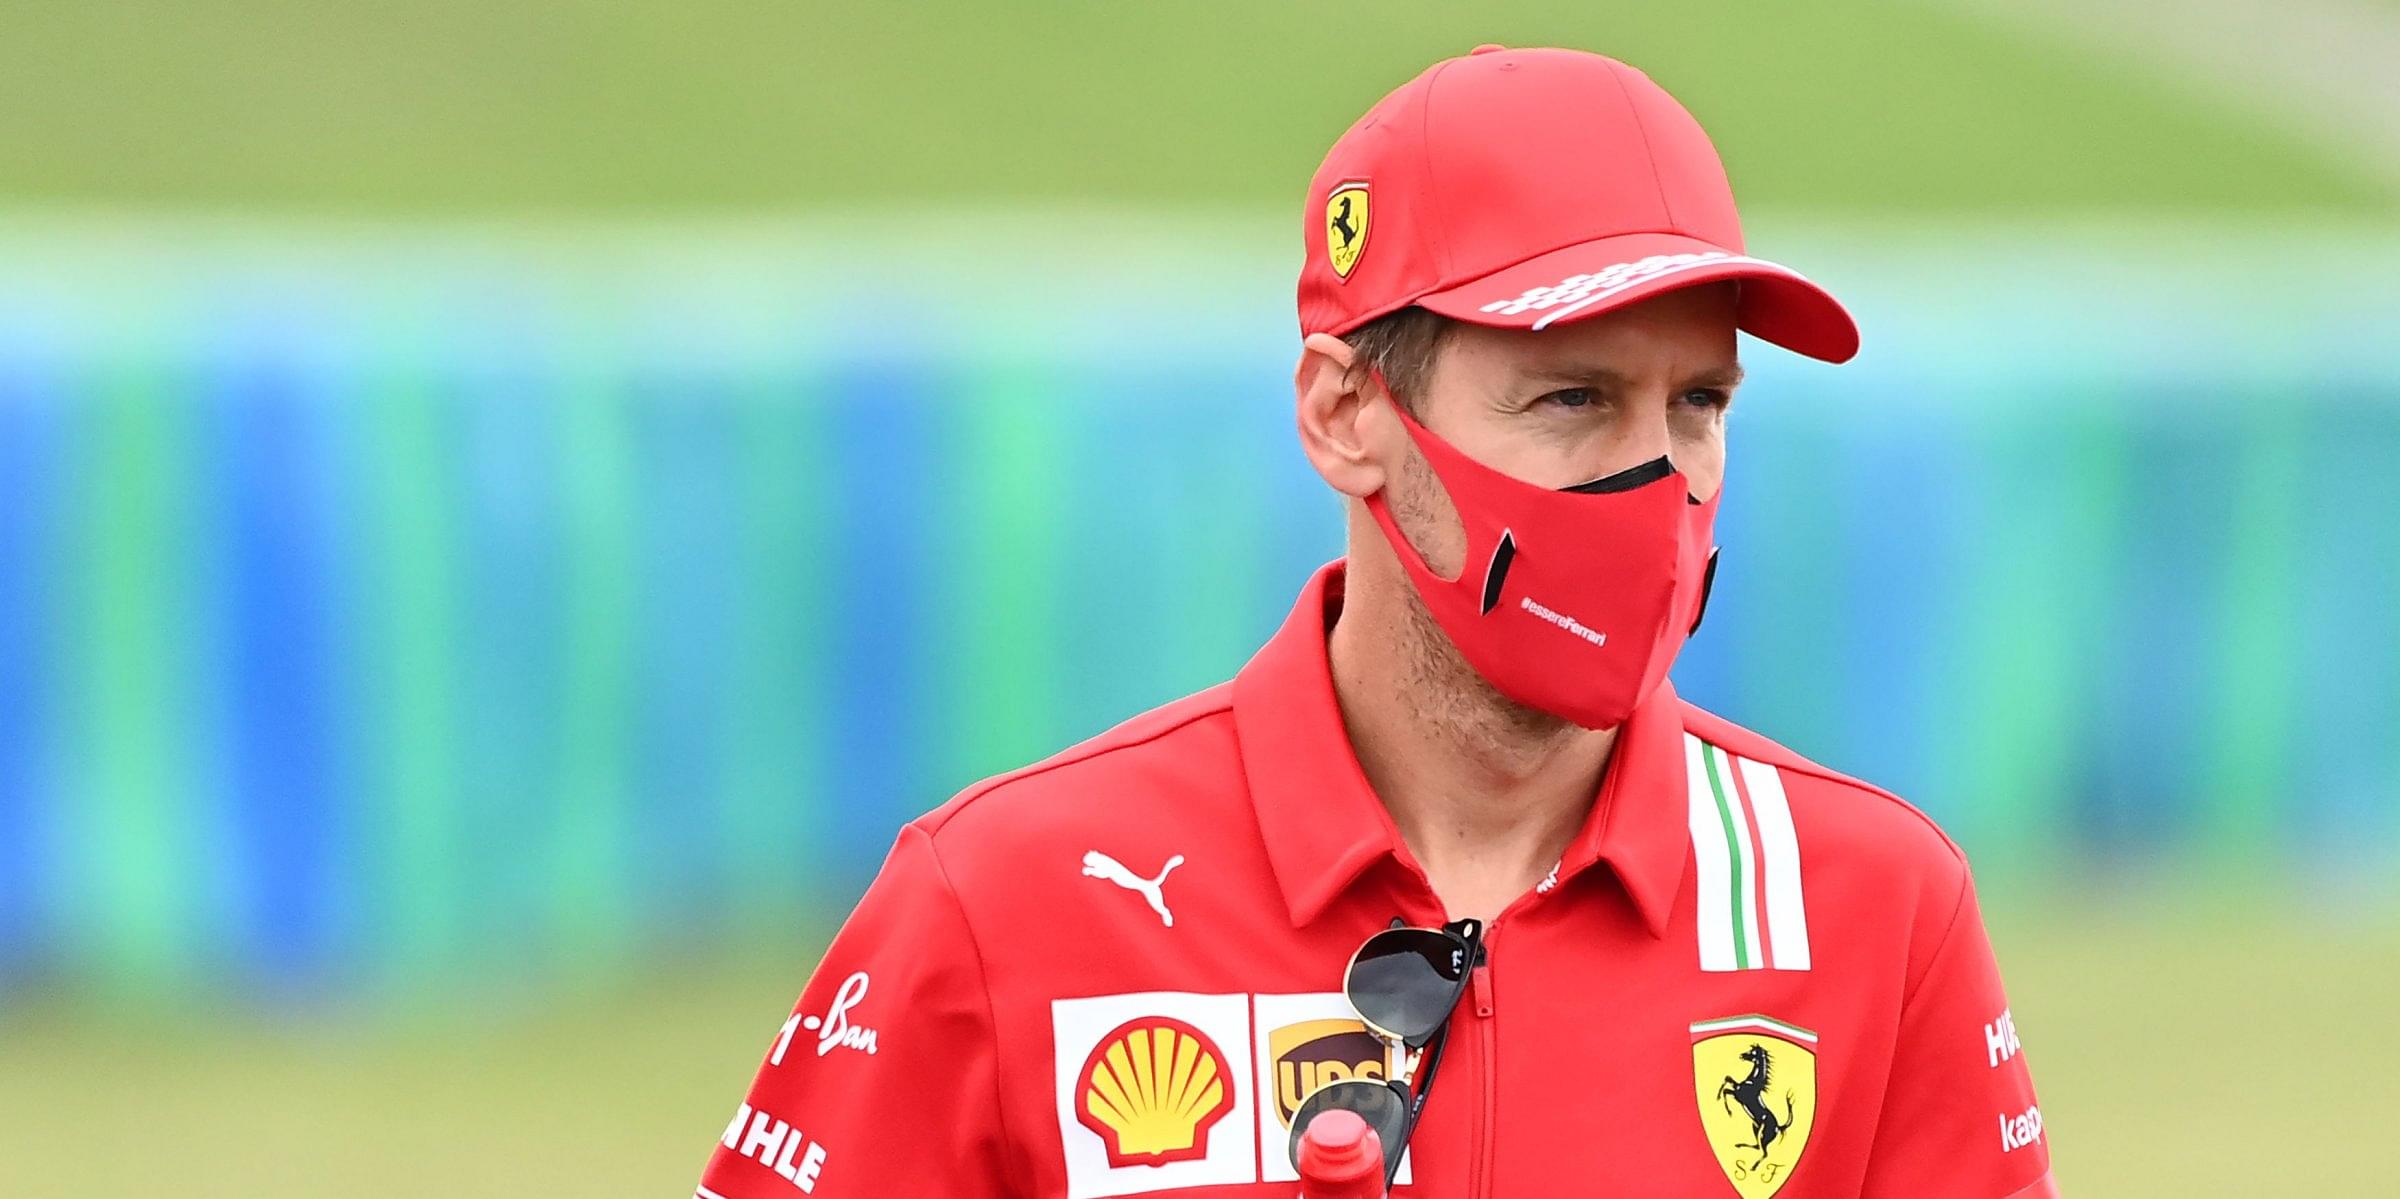 "The change in leadership from Maurizio to Mattia" - Sebastian Vettel highlights the turning point of his Ferrari tenure